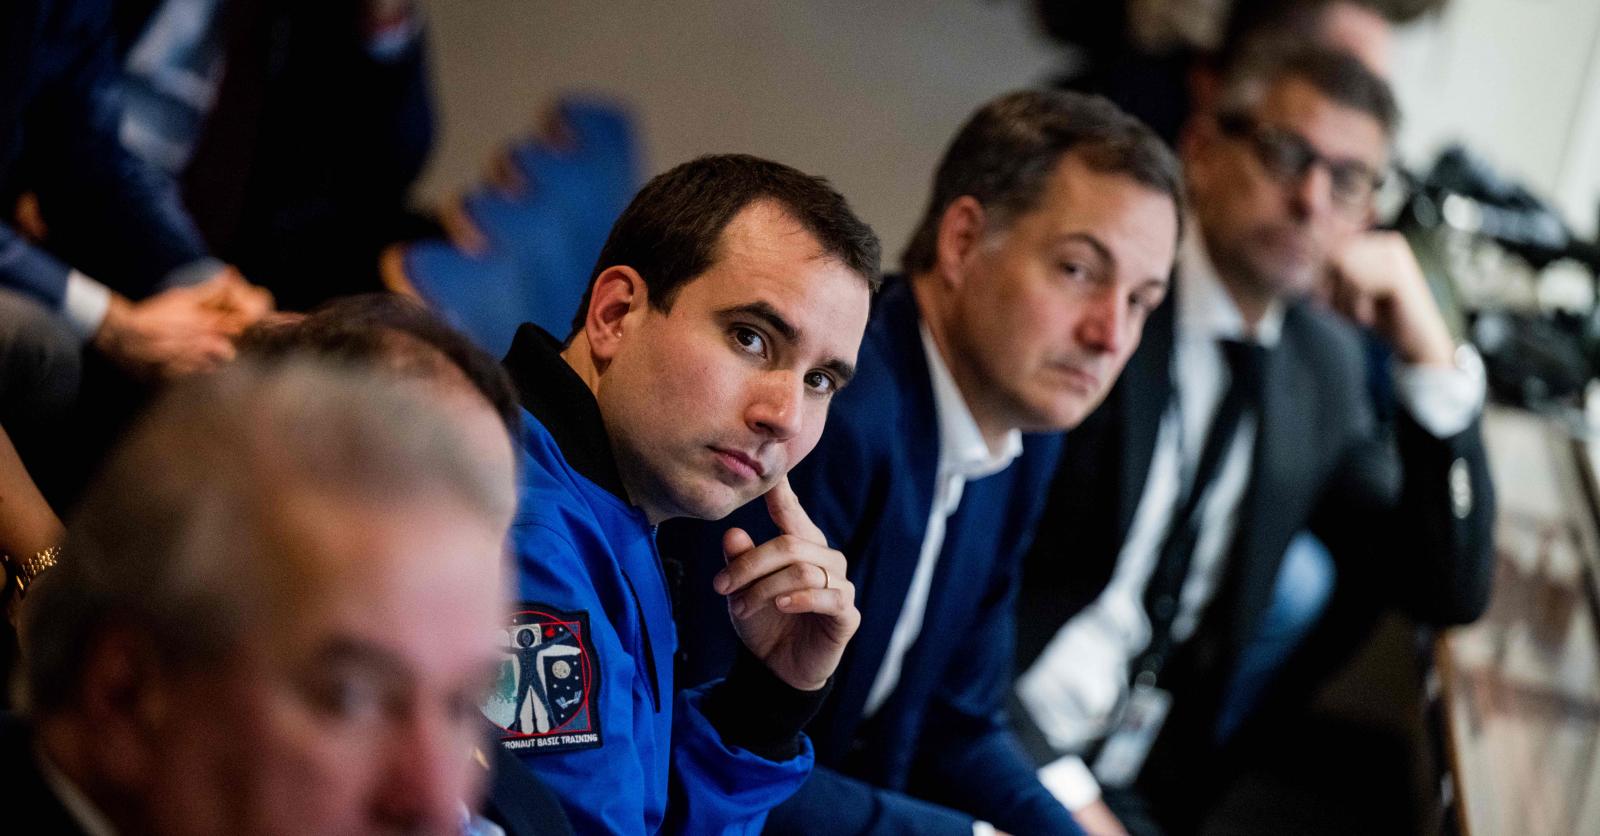 De Croo and aspiring Belgian astronaut Raphael Leguis visit NASA in Houston